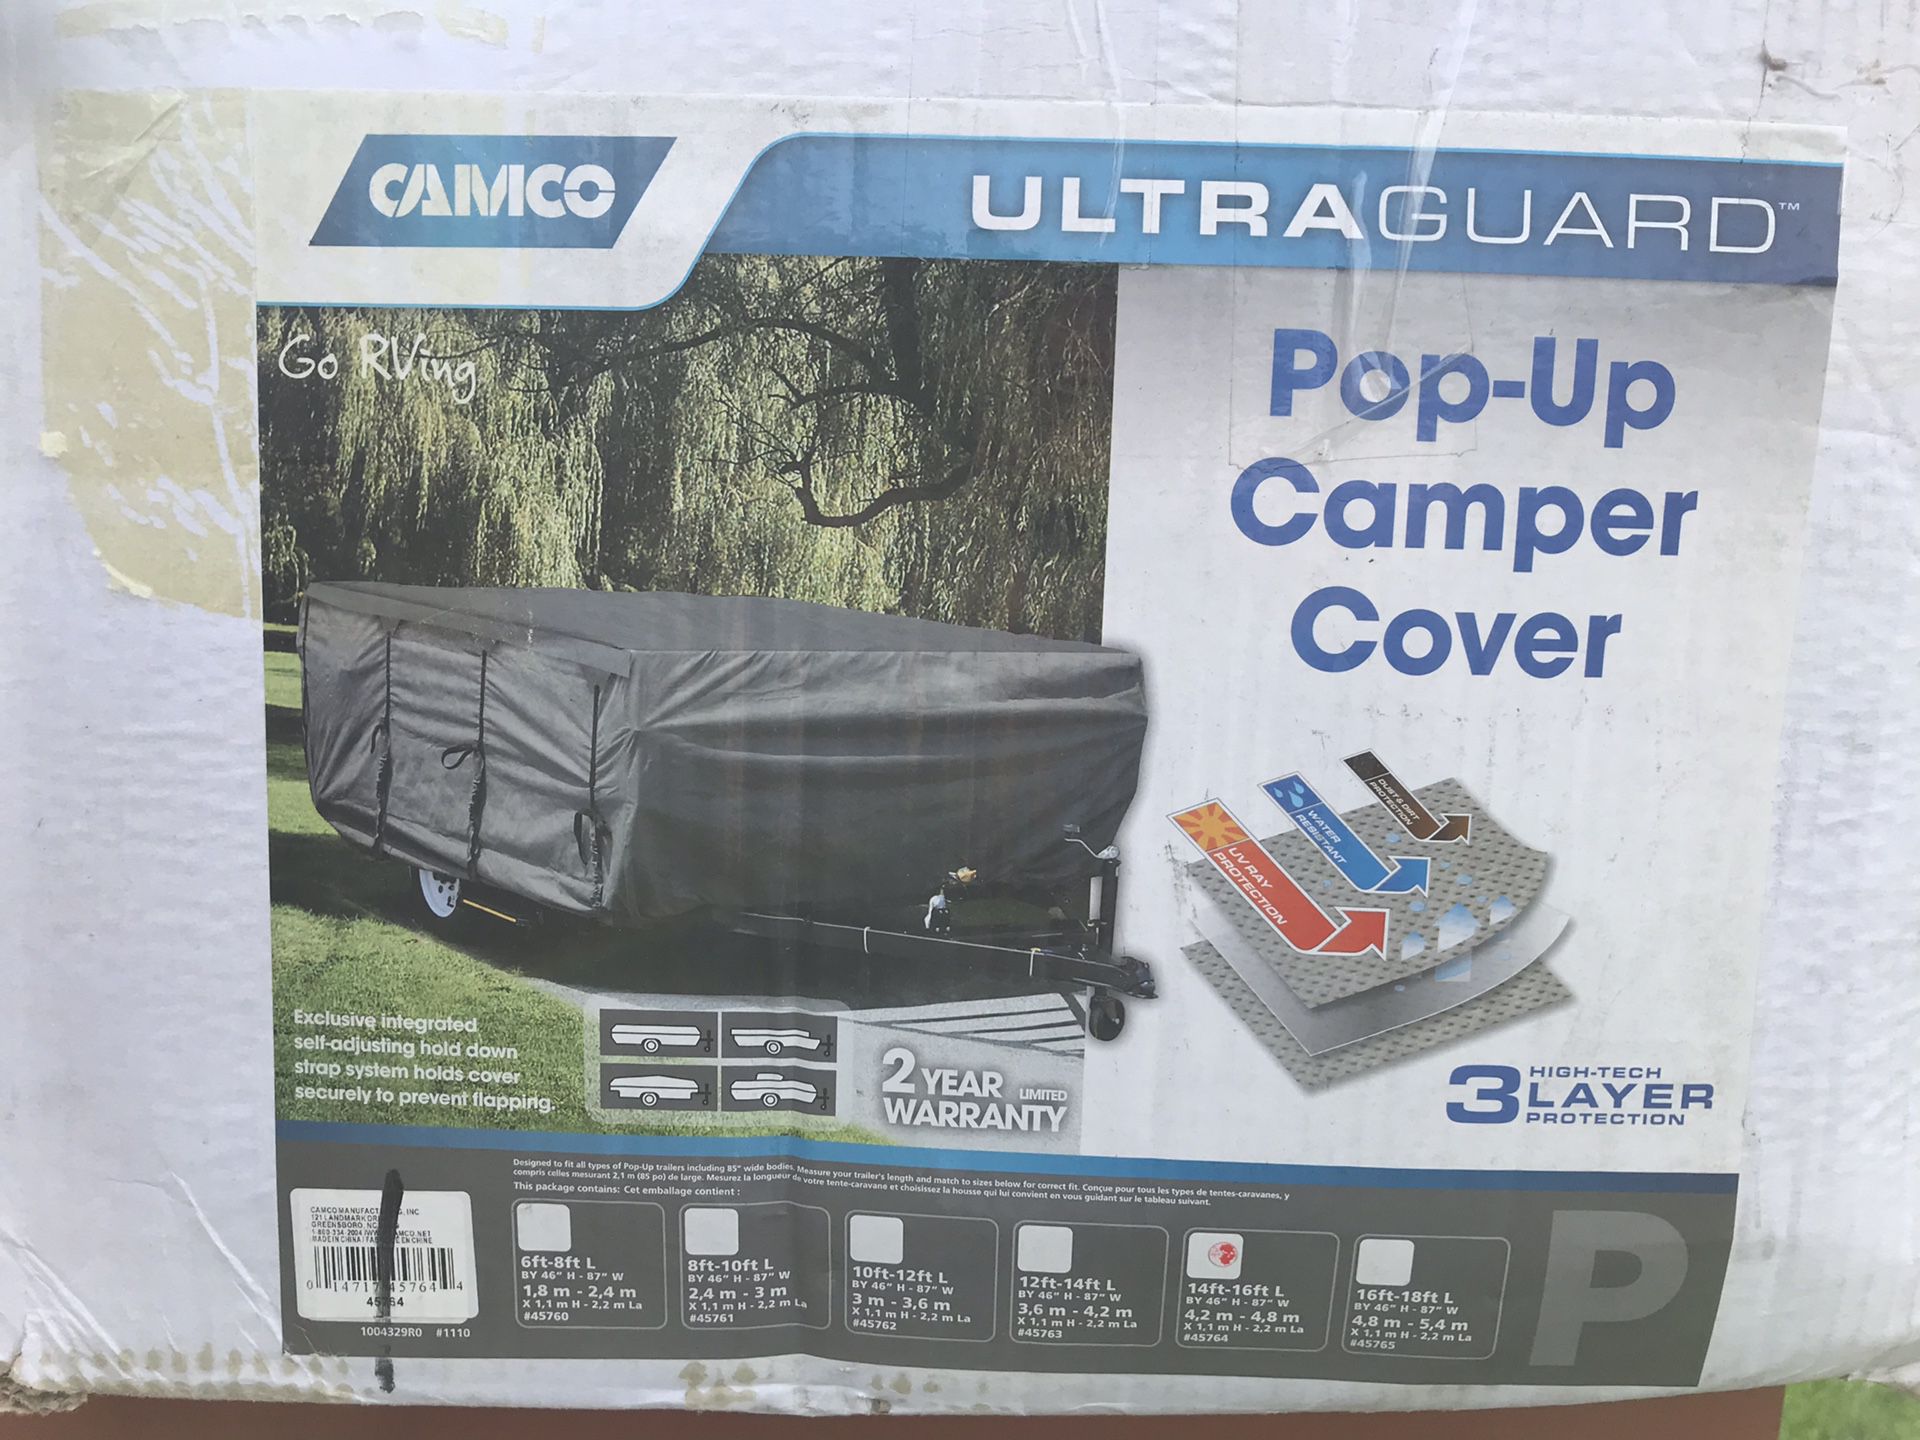 Camco ultraguard pop up camper cover for Sale in Long Beach, CA OfferUp